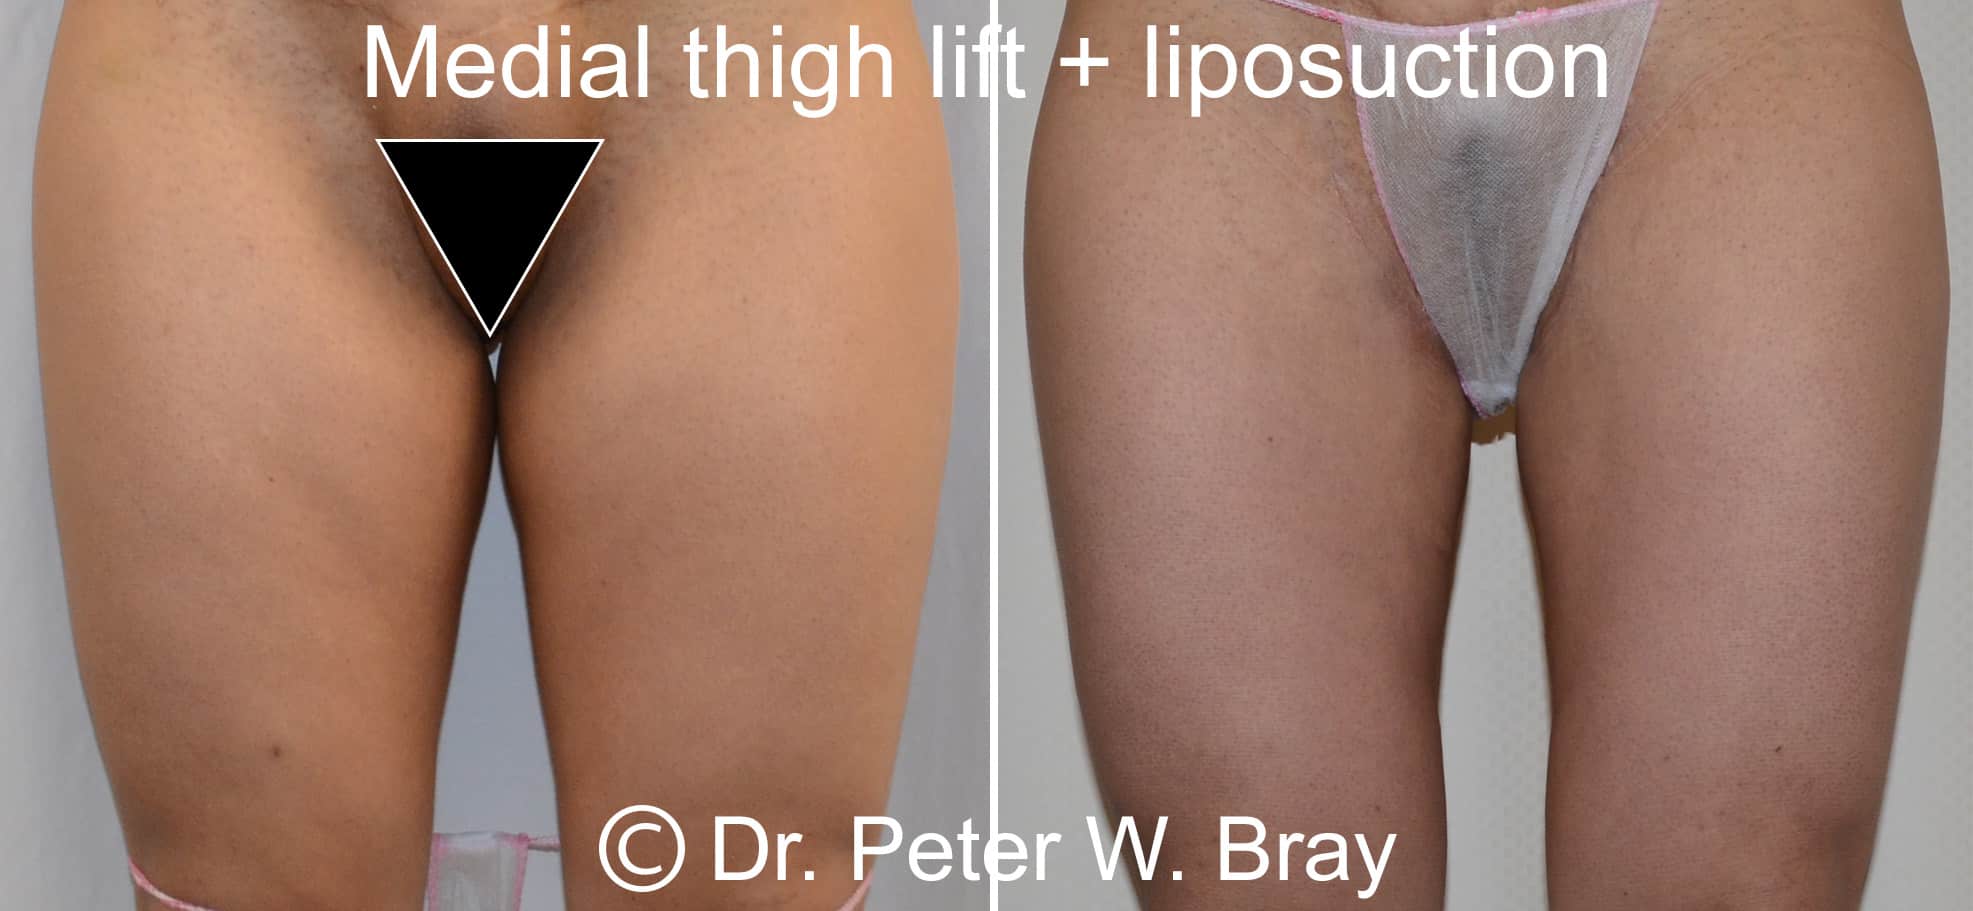 🥇 NYC Thigh Lift (Thighplasty)  Manhattan Thigh Plastic Surgery